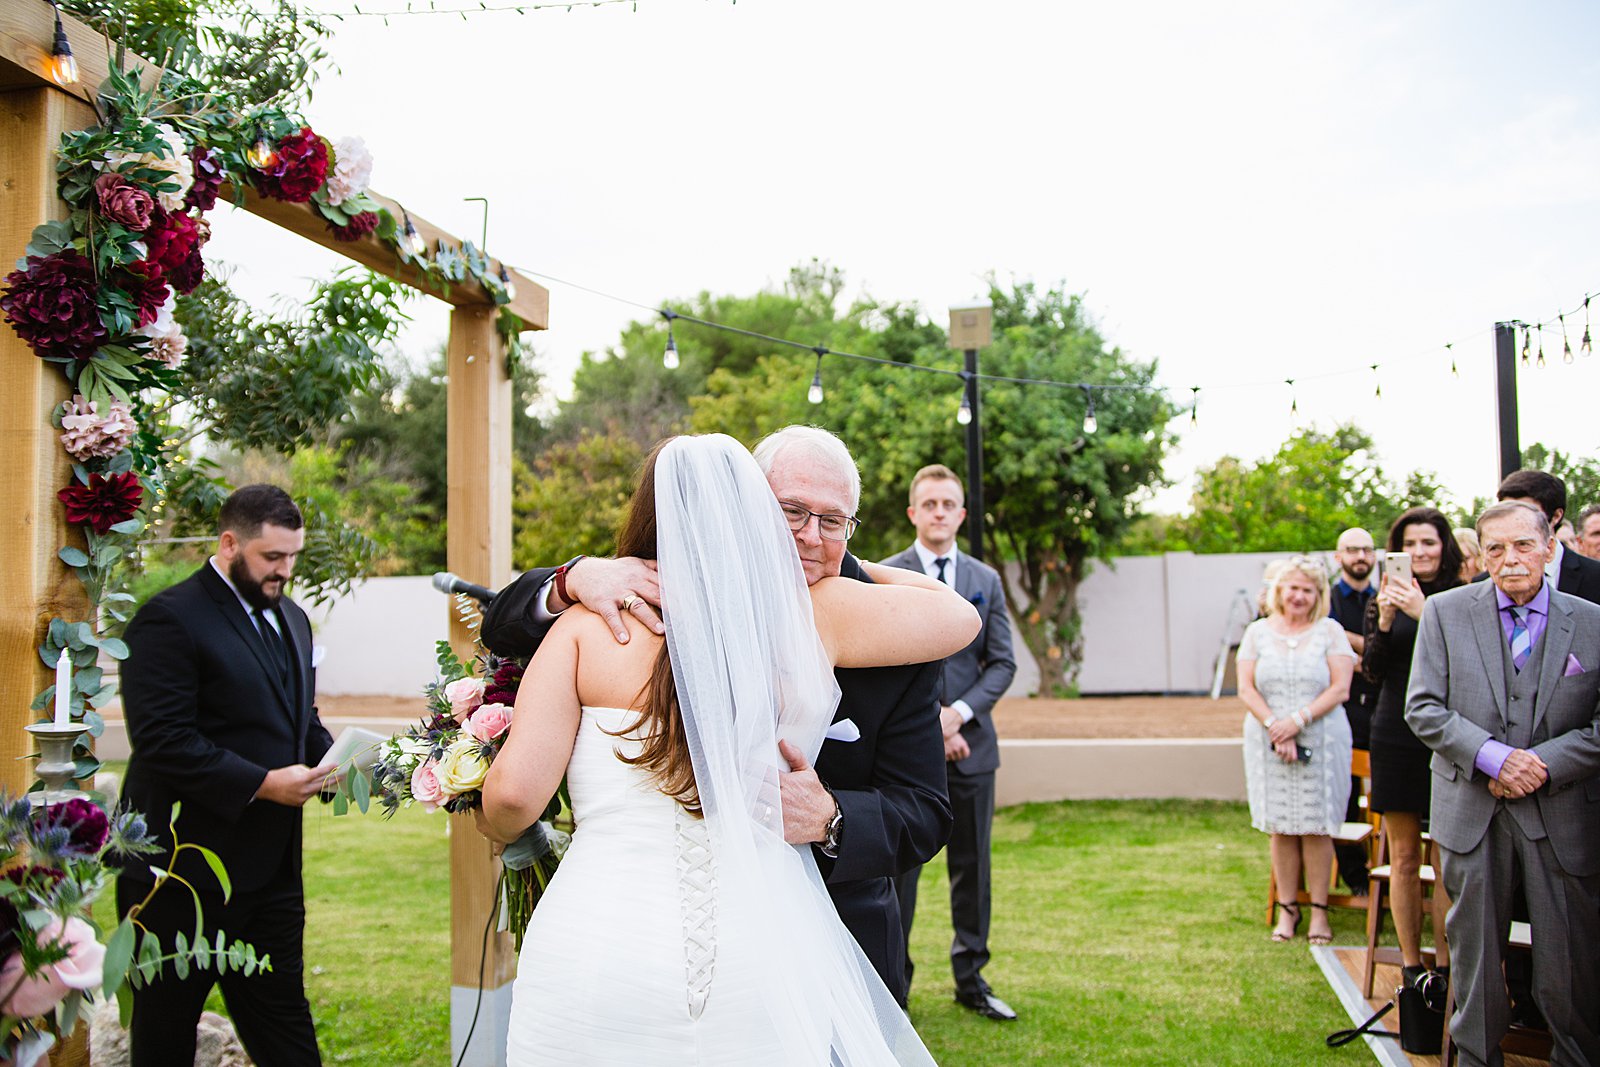 Bride walking down aisle during an Arizona backyard wedding ceremony by Phoenix wedding photographer PMA Photography.